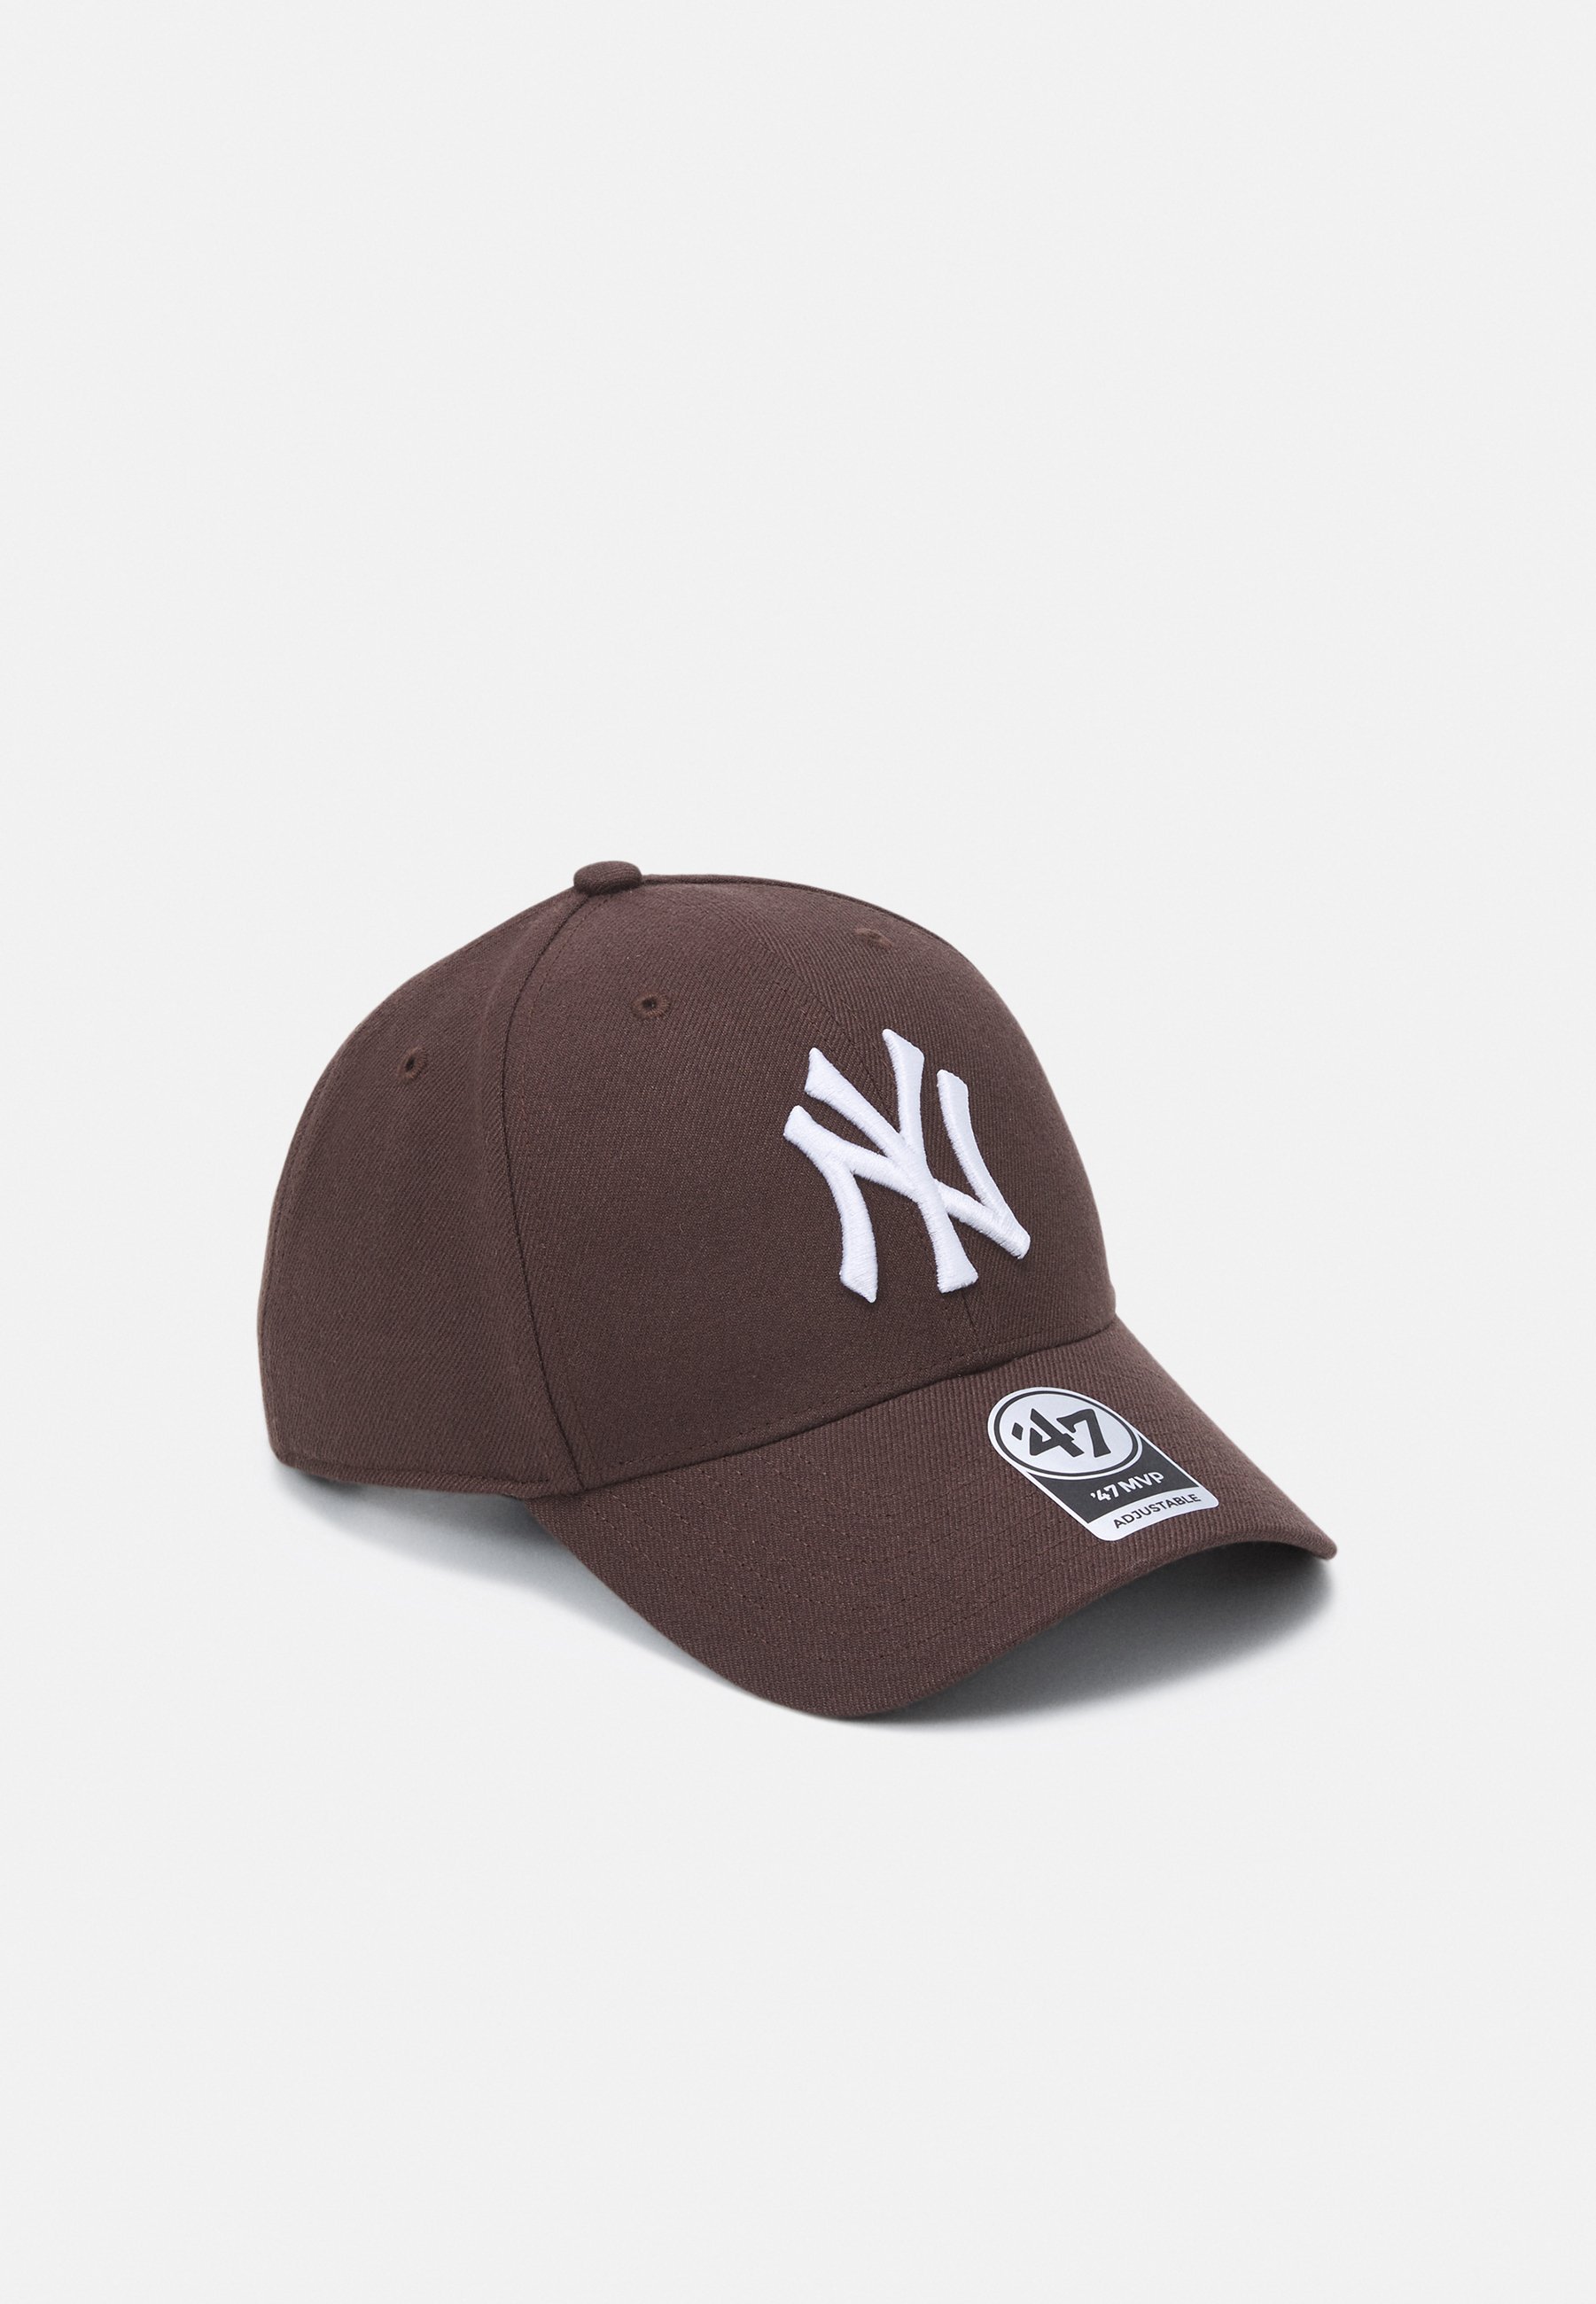 yankees hat adjustable